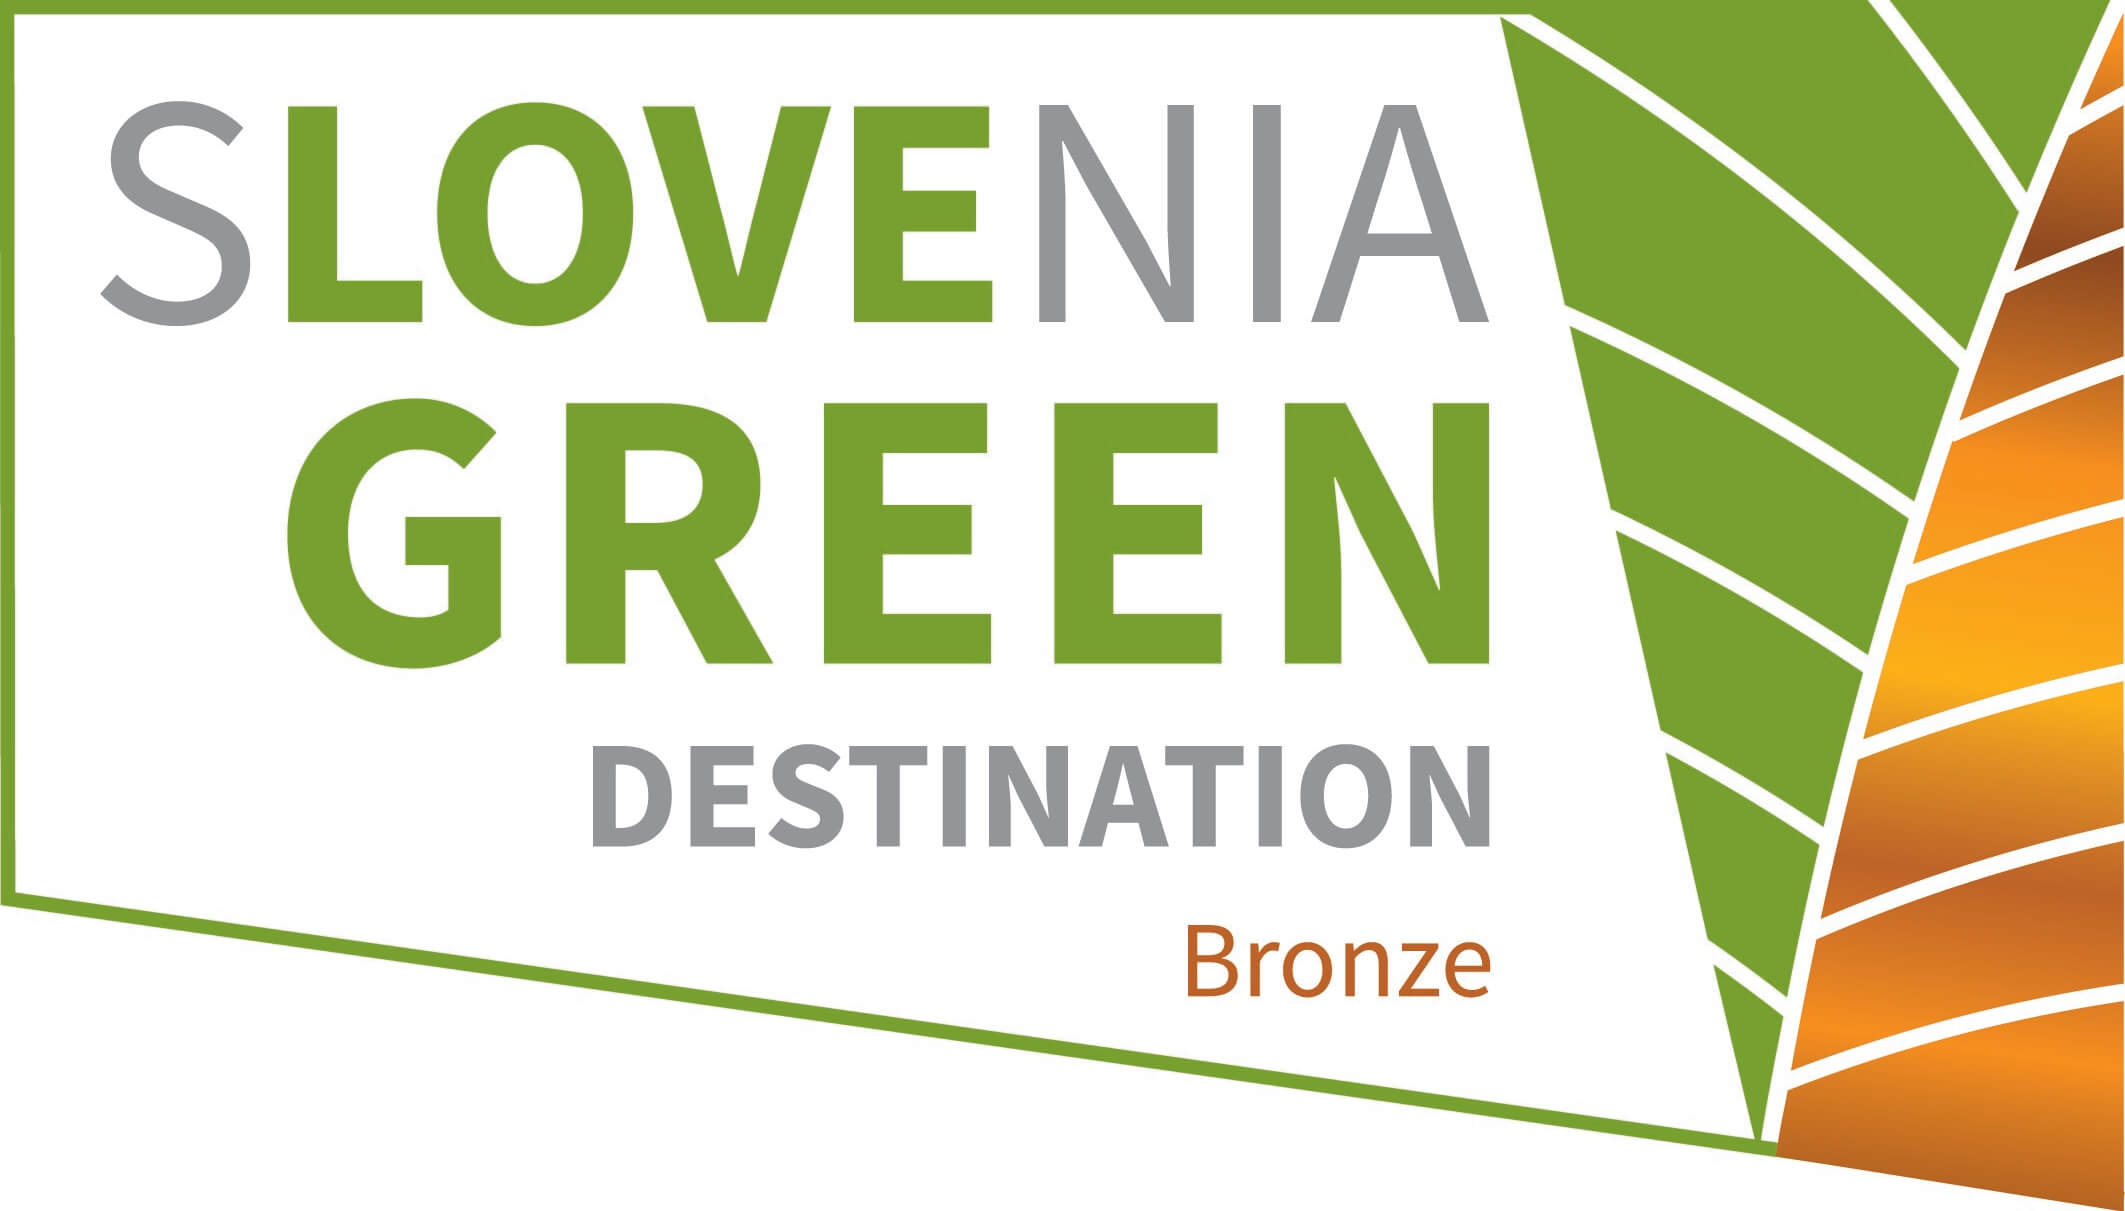 Logotip Slovenia green destination - bronze